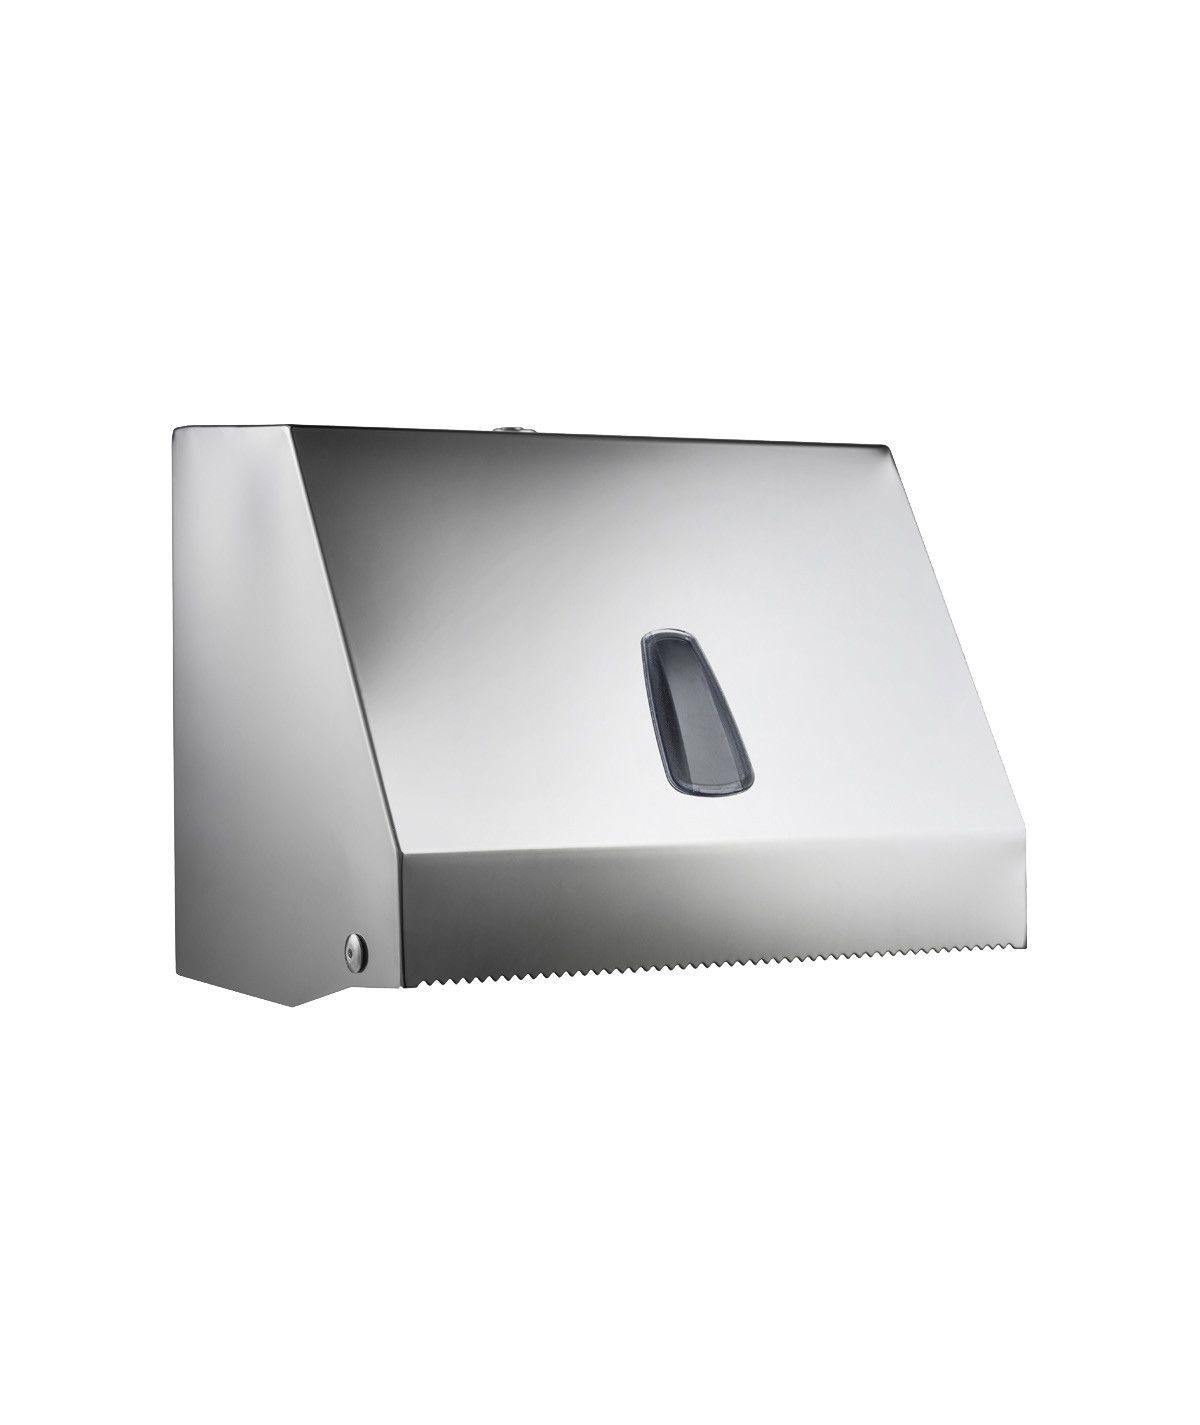 516 DISPENSER COMBI - Dispenser carta asciugamani - Linea standard -  Dispenser accessori bagno - Attrezzature